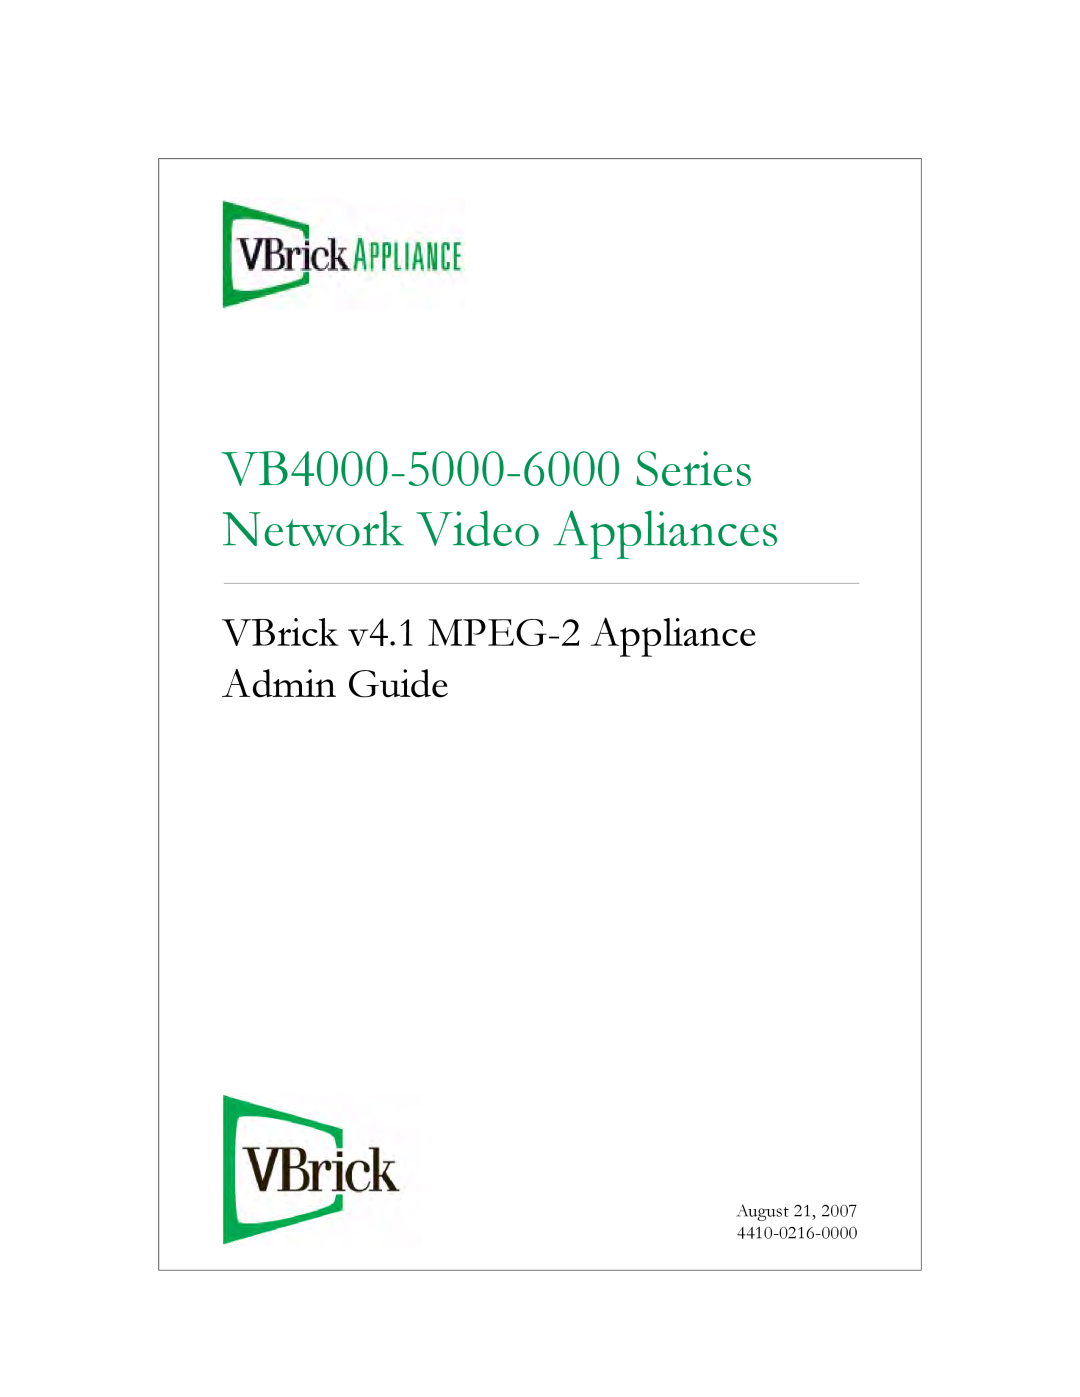 VBrick Systems VB6000 manual VB4000-5000-6000 Series Network Video Appliances, VBrick v4.2 WM Appliance Admin Guide 